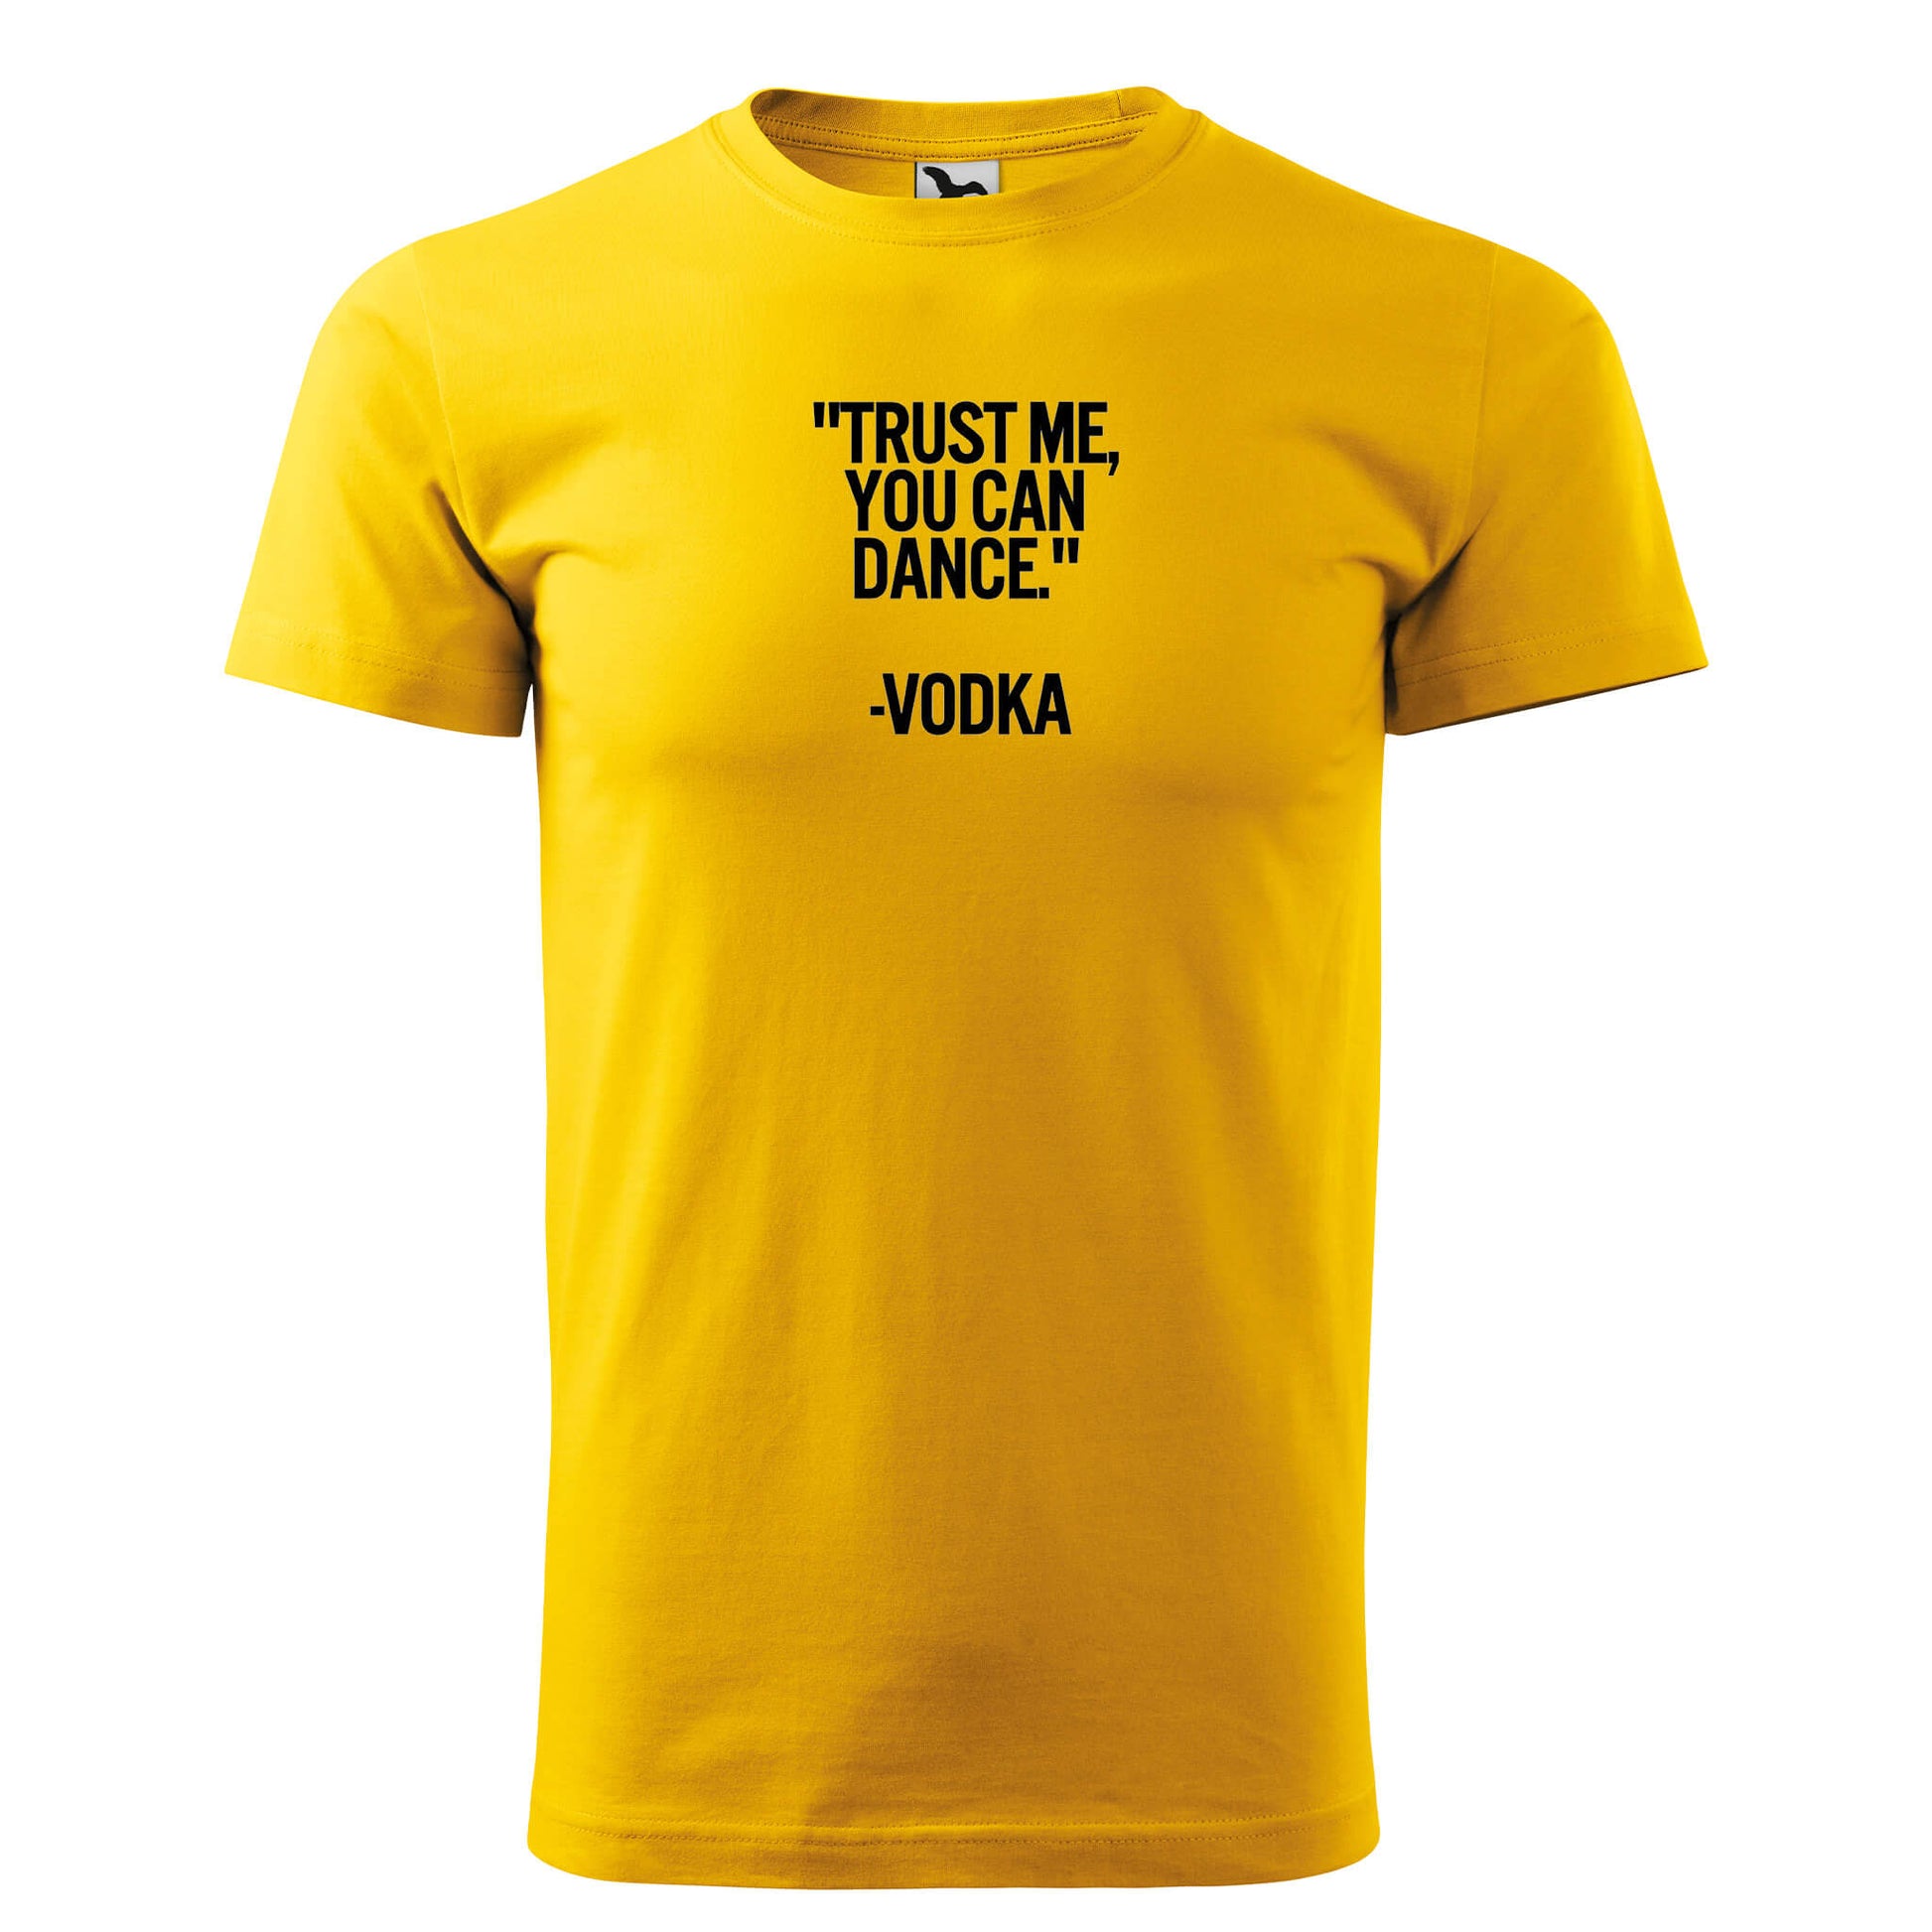 T-shirt - Trust me you can dance - Vodka - rvdesignprint